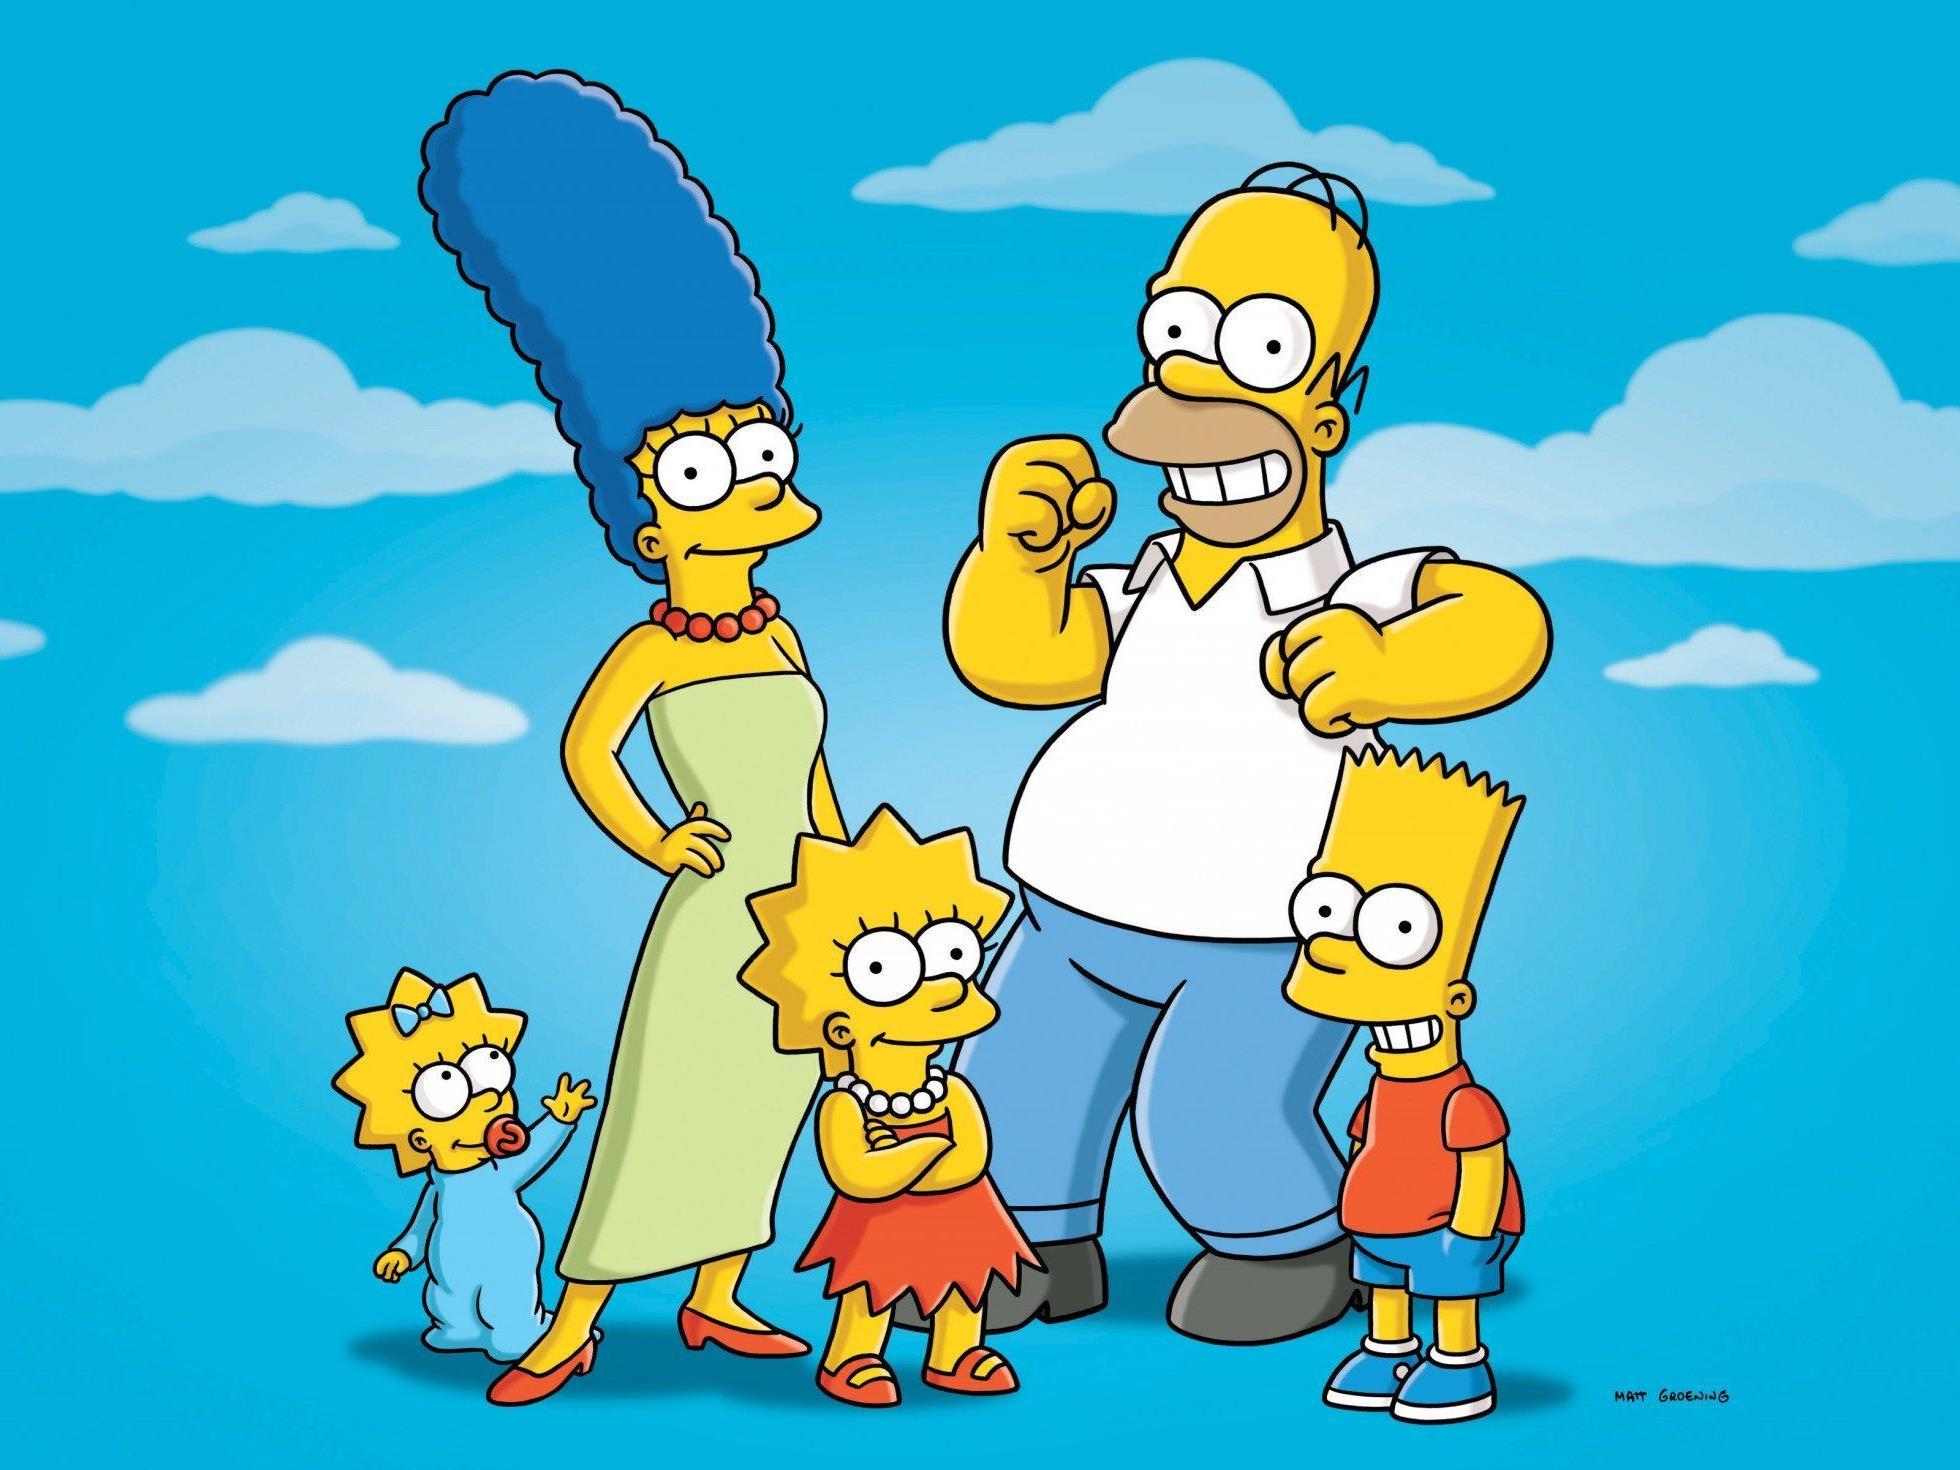 Rätselraten um Todeskandidaten bei den "Simpsons".